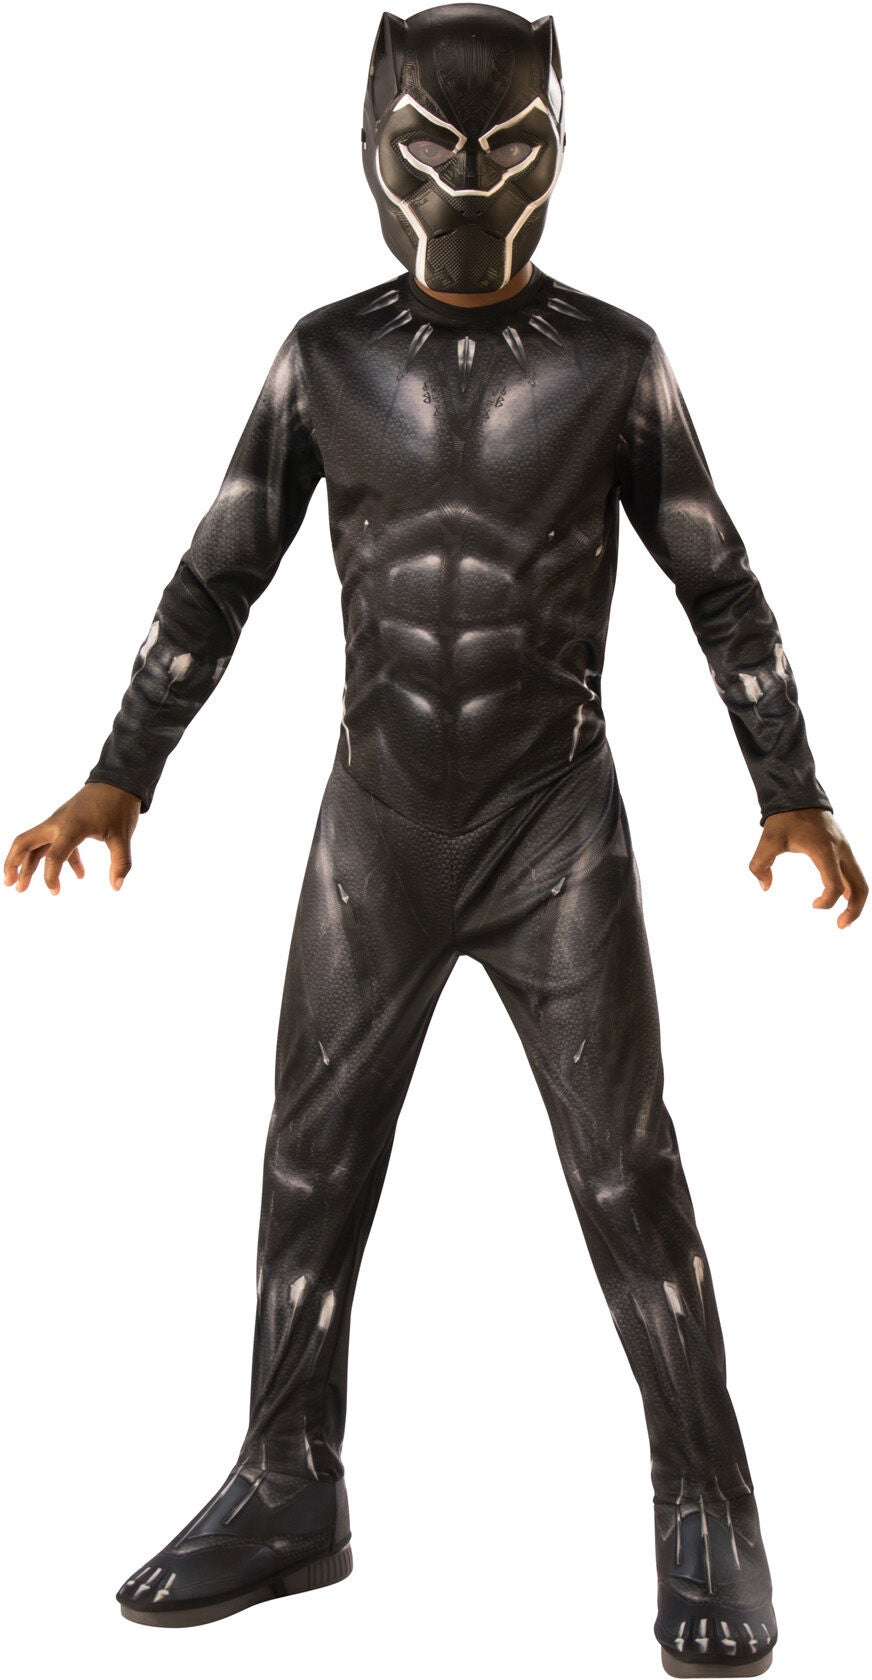 Marvel Avengers Black Panther Kostüm mit Maske, 3-5 Jahre von Marvel Avengers